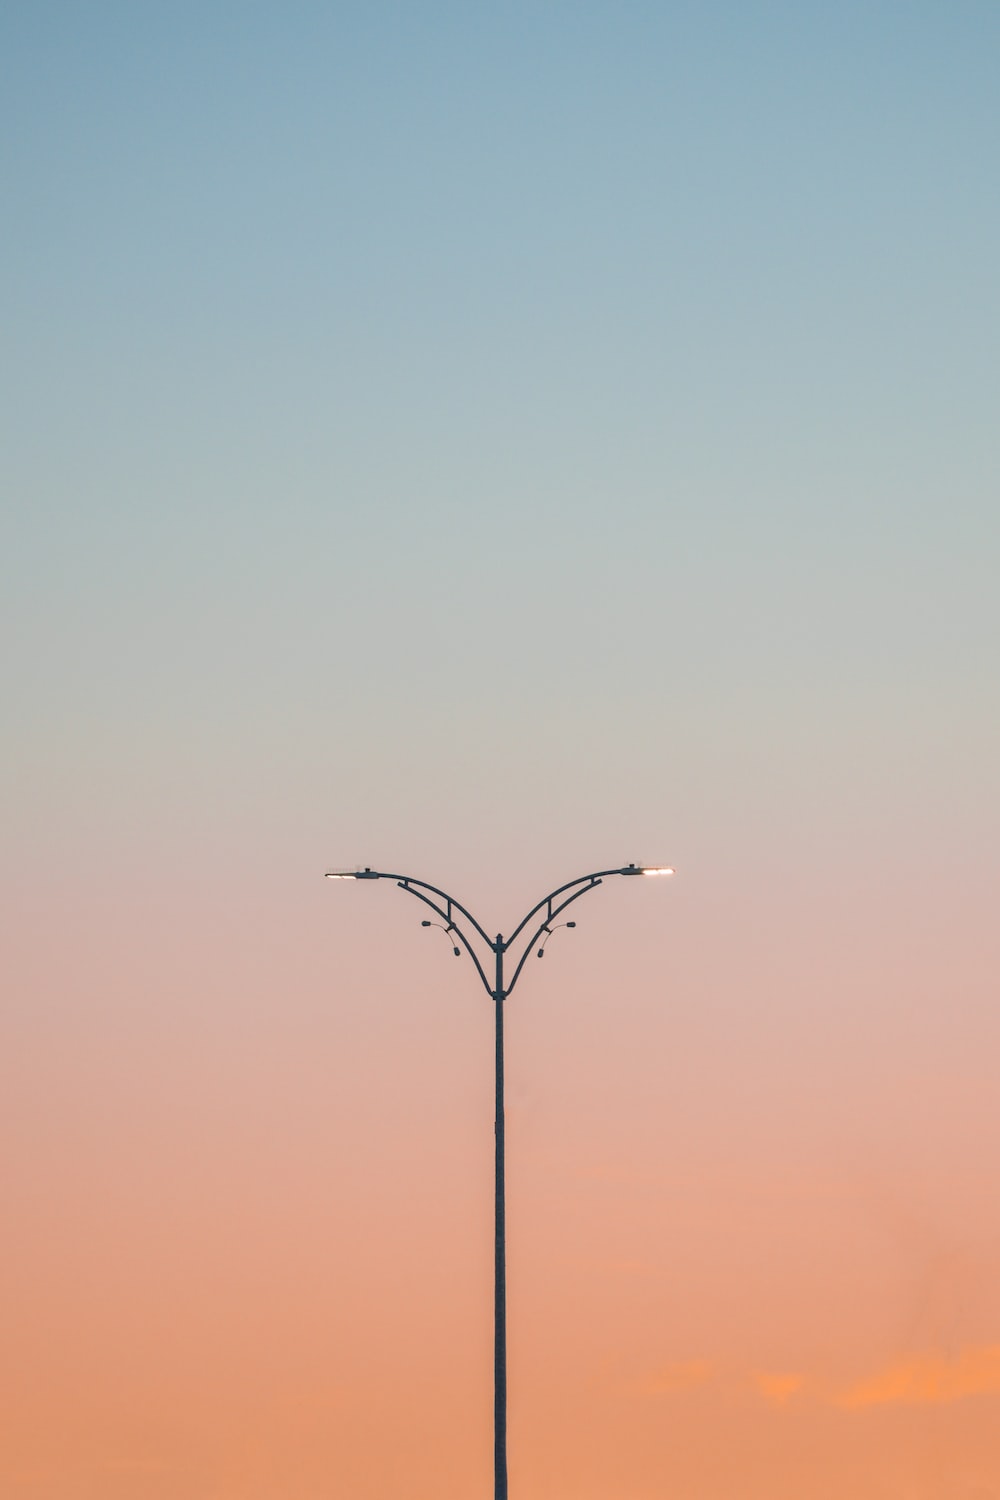 A street light with a sky background - Pastel minimalist